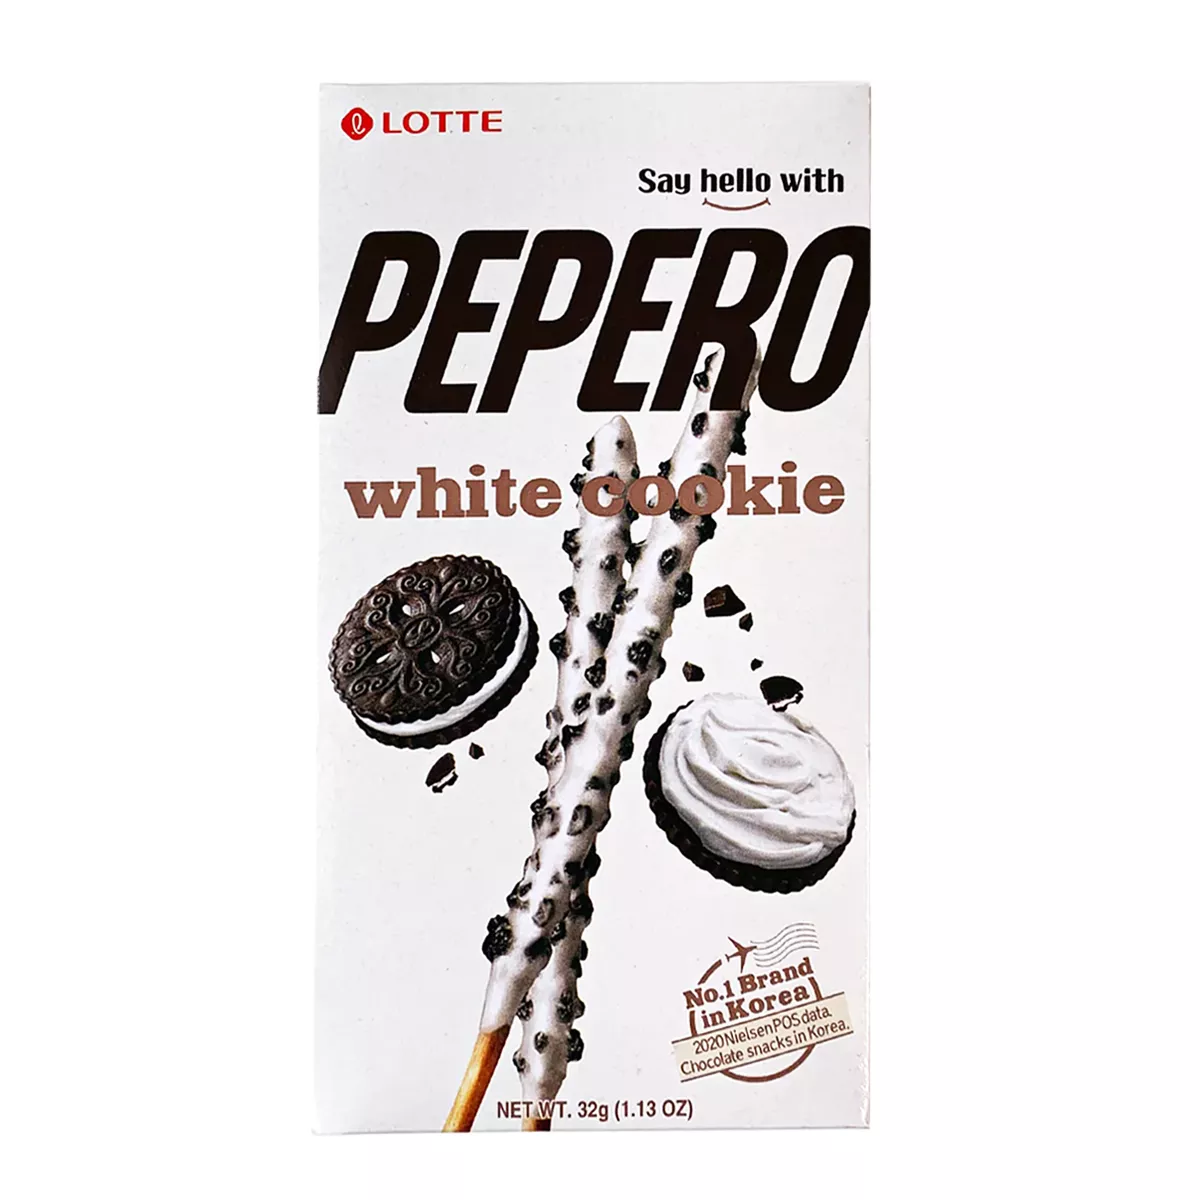 White Cookie Pepero LOTTE 32g, [],asianfood.ro